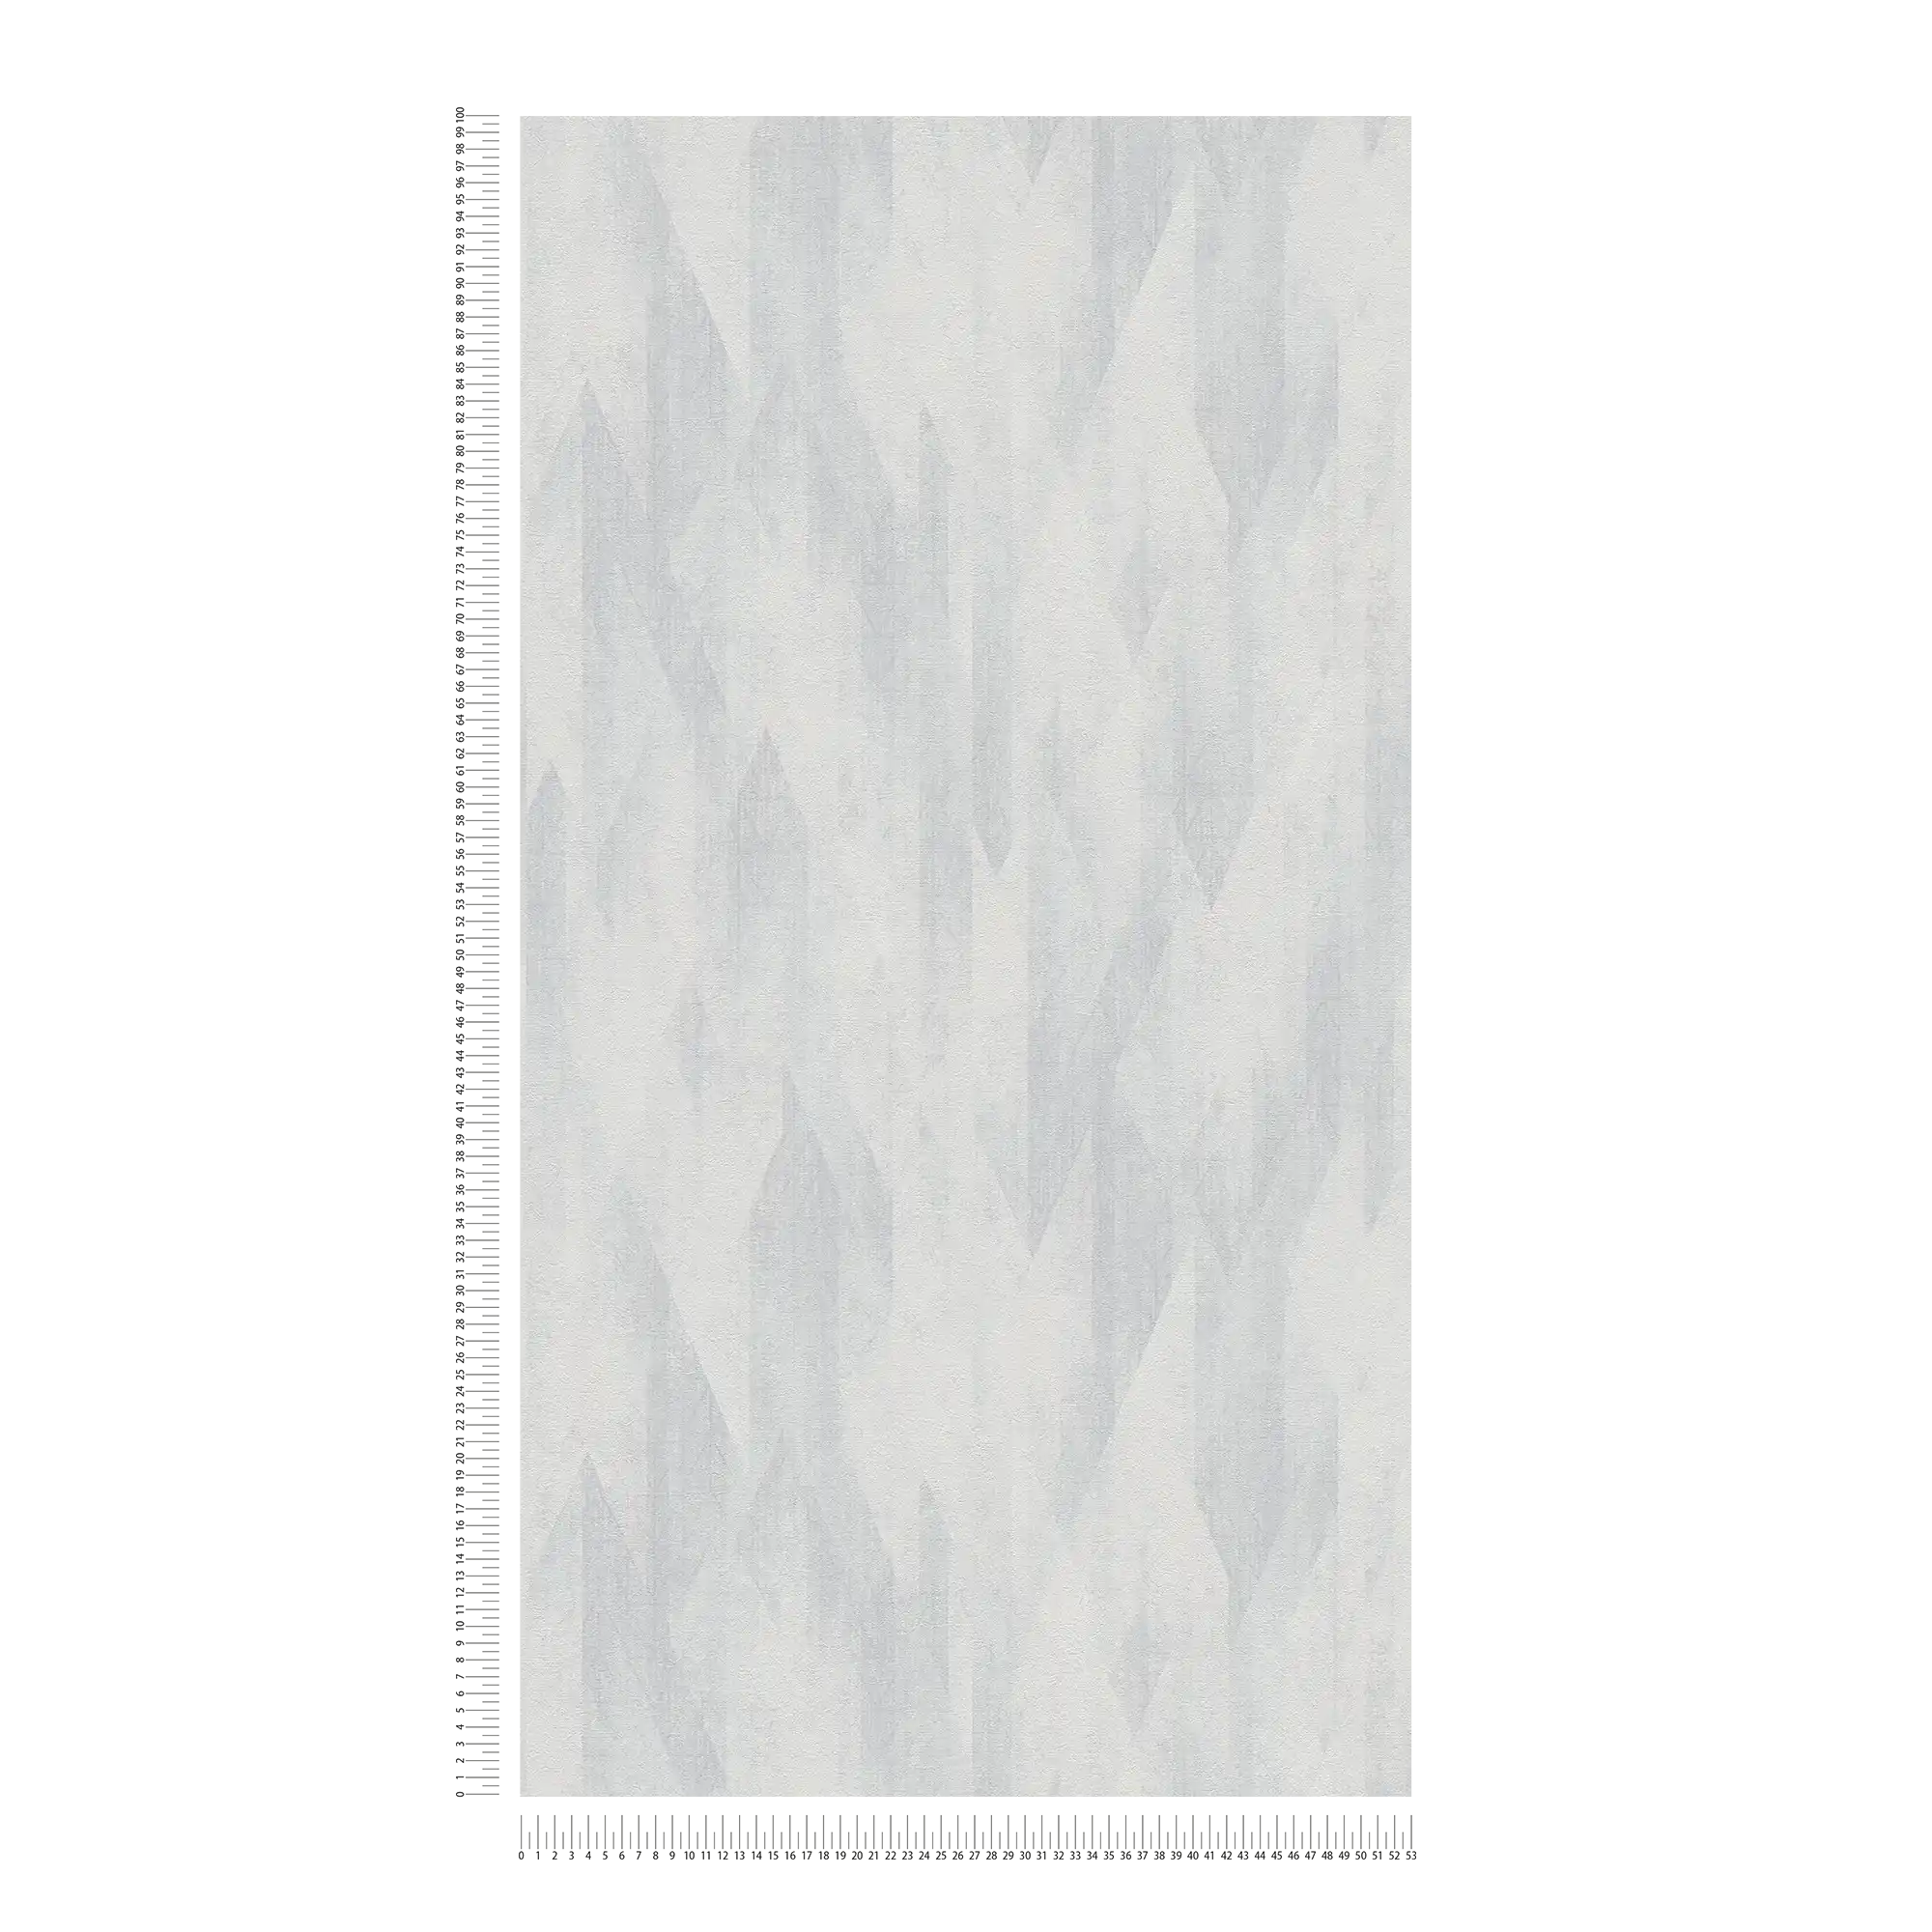             Graphic non-woven wallpaper with subtle diamond pattern - grey, white
        